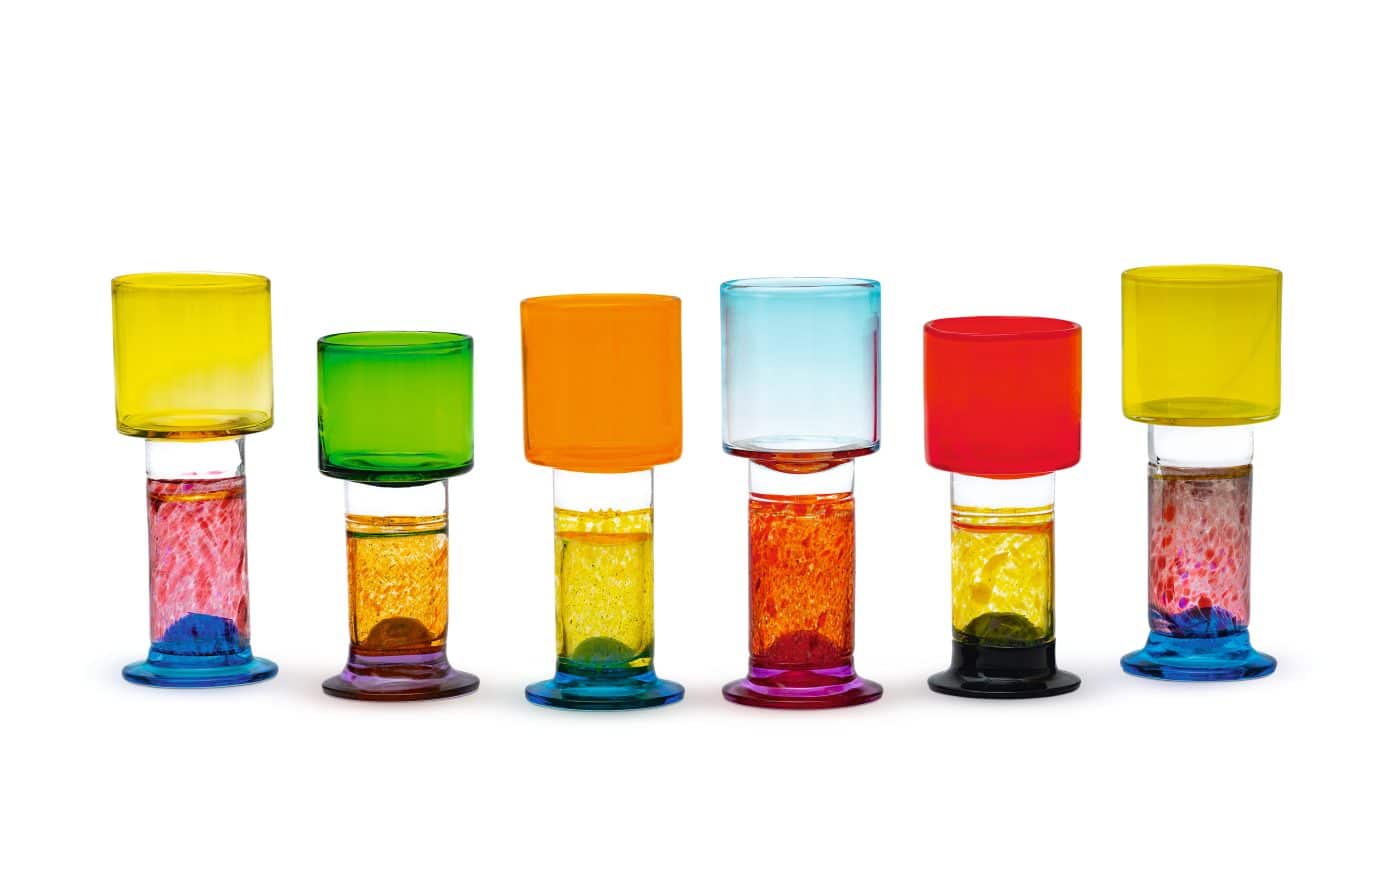 Multicolor goblets of various heights by Finnish designer KAJ FRANCK